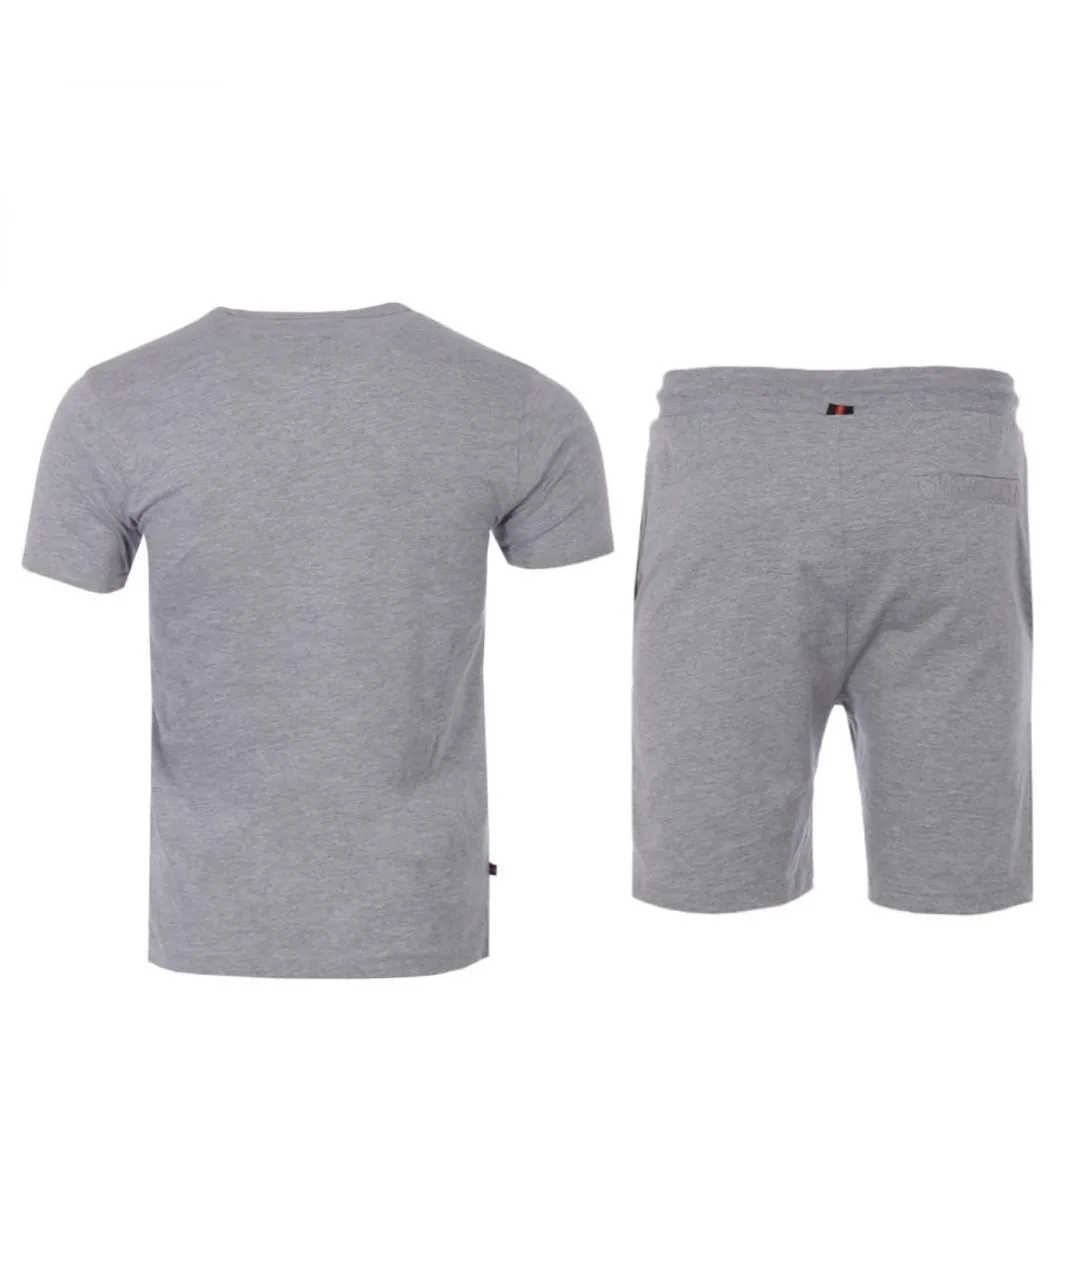 Luke 1977 Mens Trousersnake T-Shirt Shorts Set in Grey